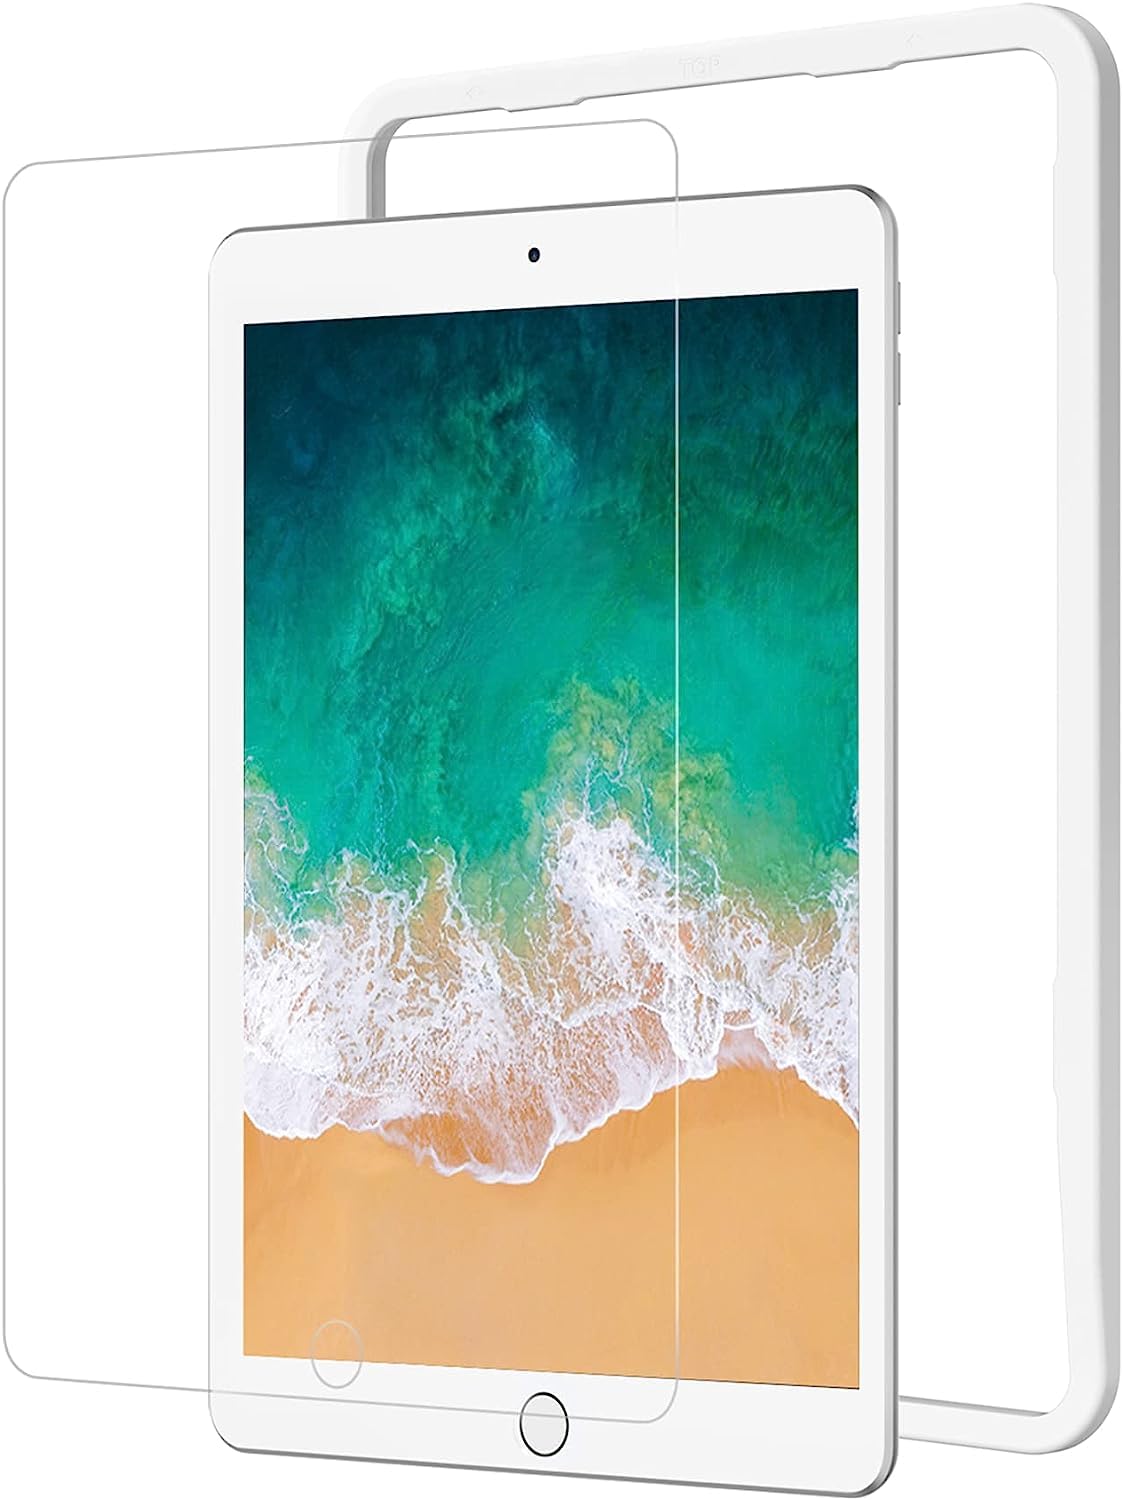 NIMASO ガラスフィルム iPad 9.7 5/6世代 用 iPad Air2 / Air (2013) / iPad Pro 9.7 対応 ガイド枠付き 保護 フイルム NTB16B01